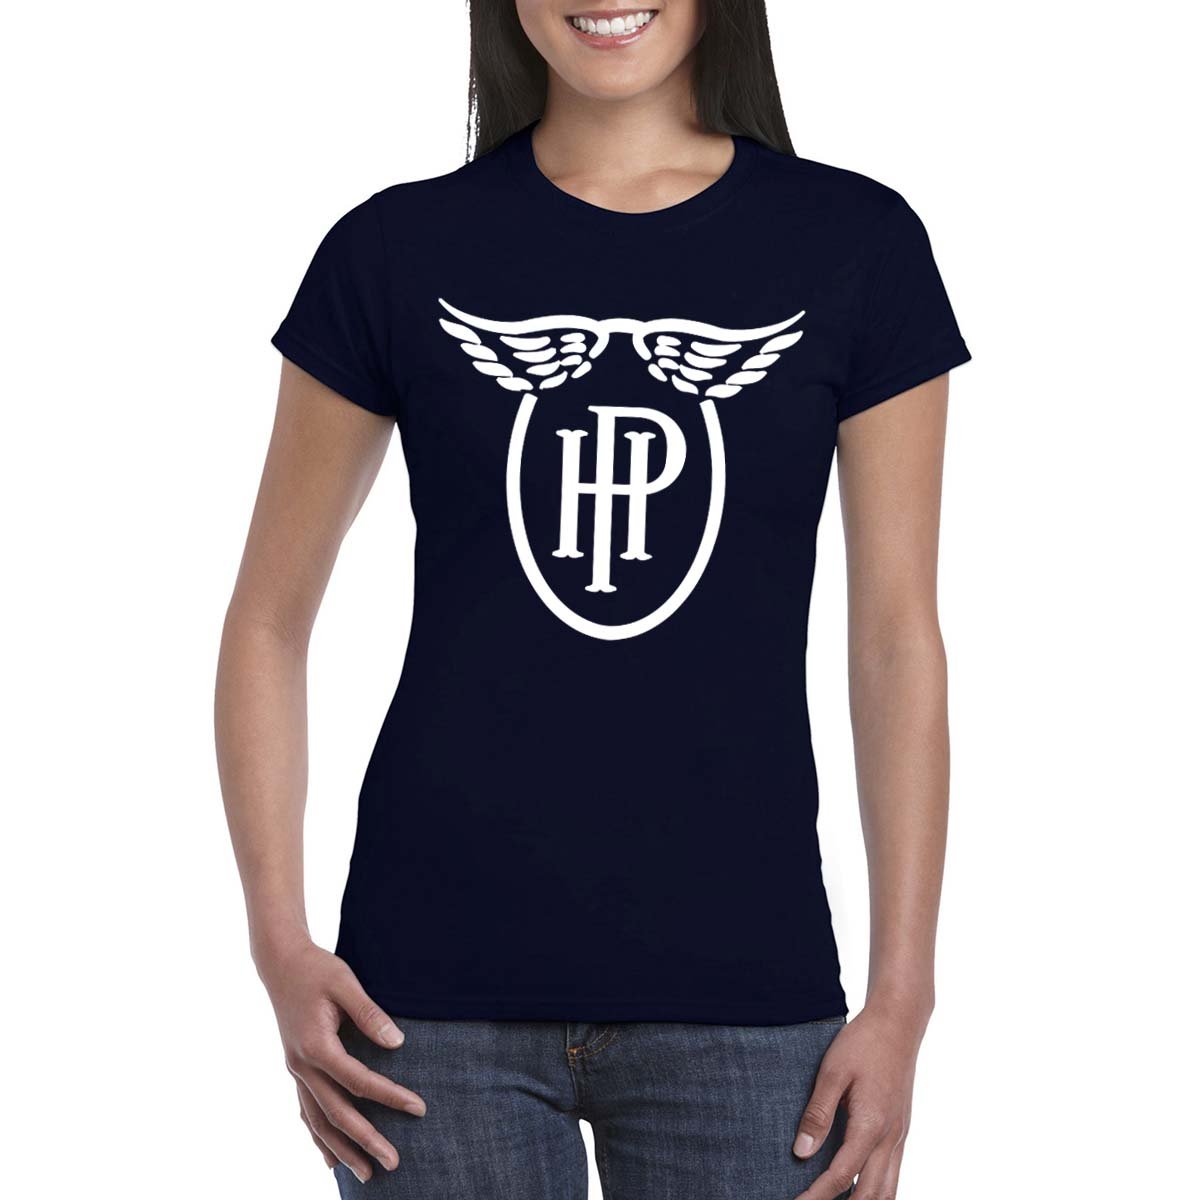 HANDLEY PAGE Logo Women's Aviation T-Shirt